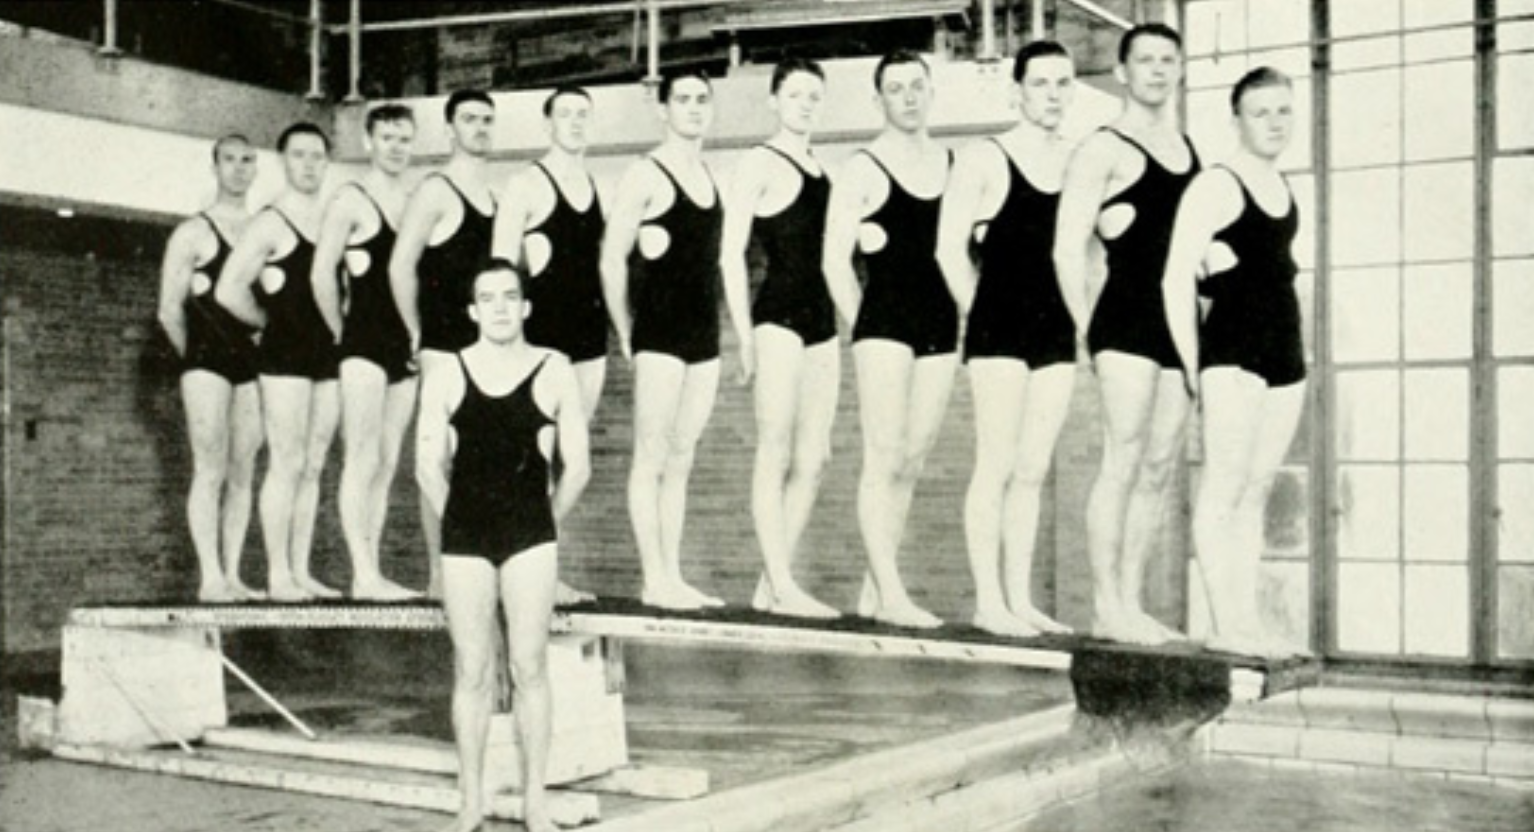 Full Team Photo 1931-32